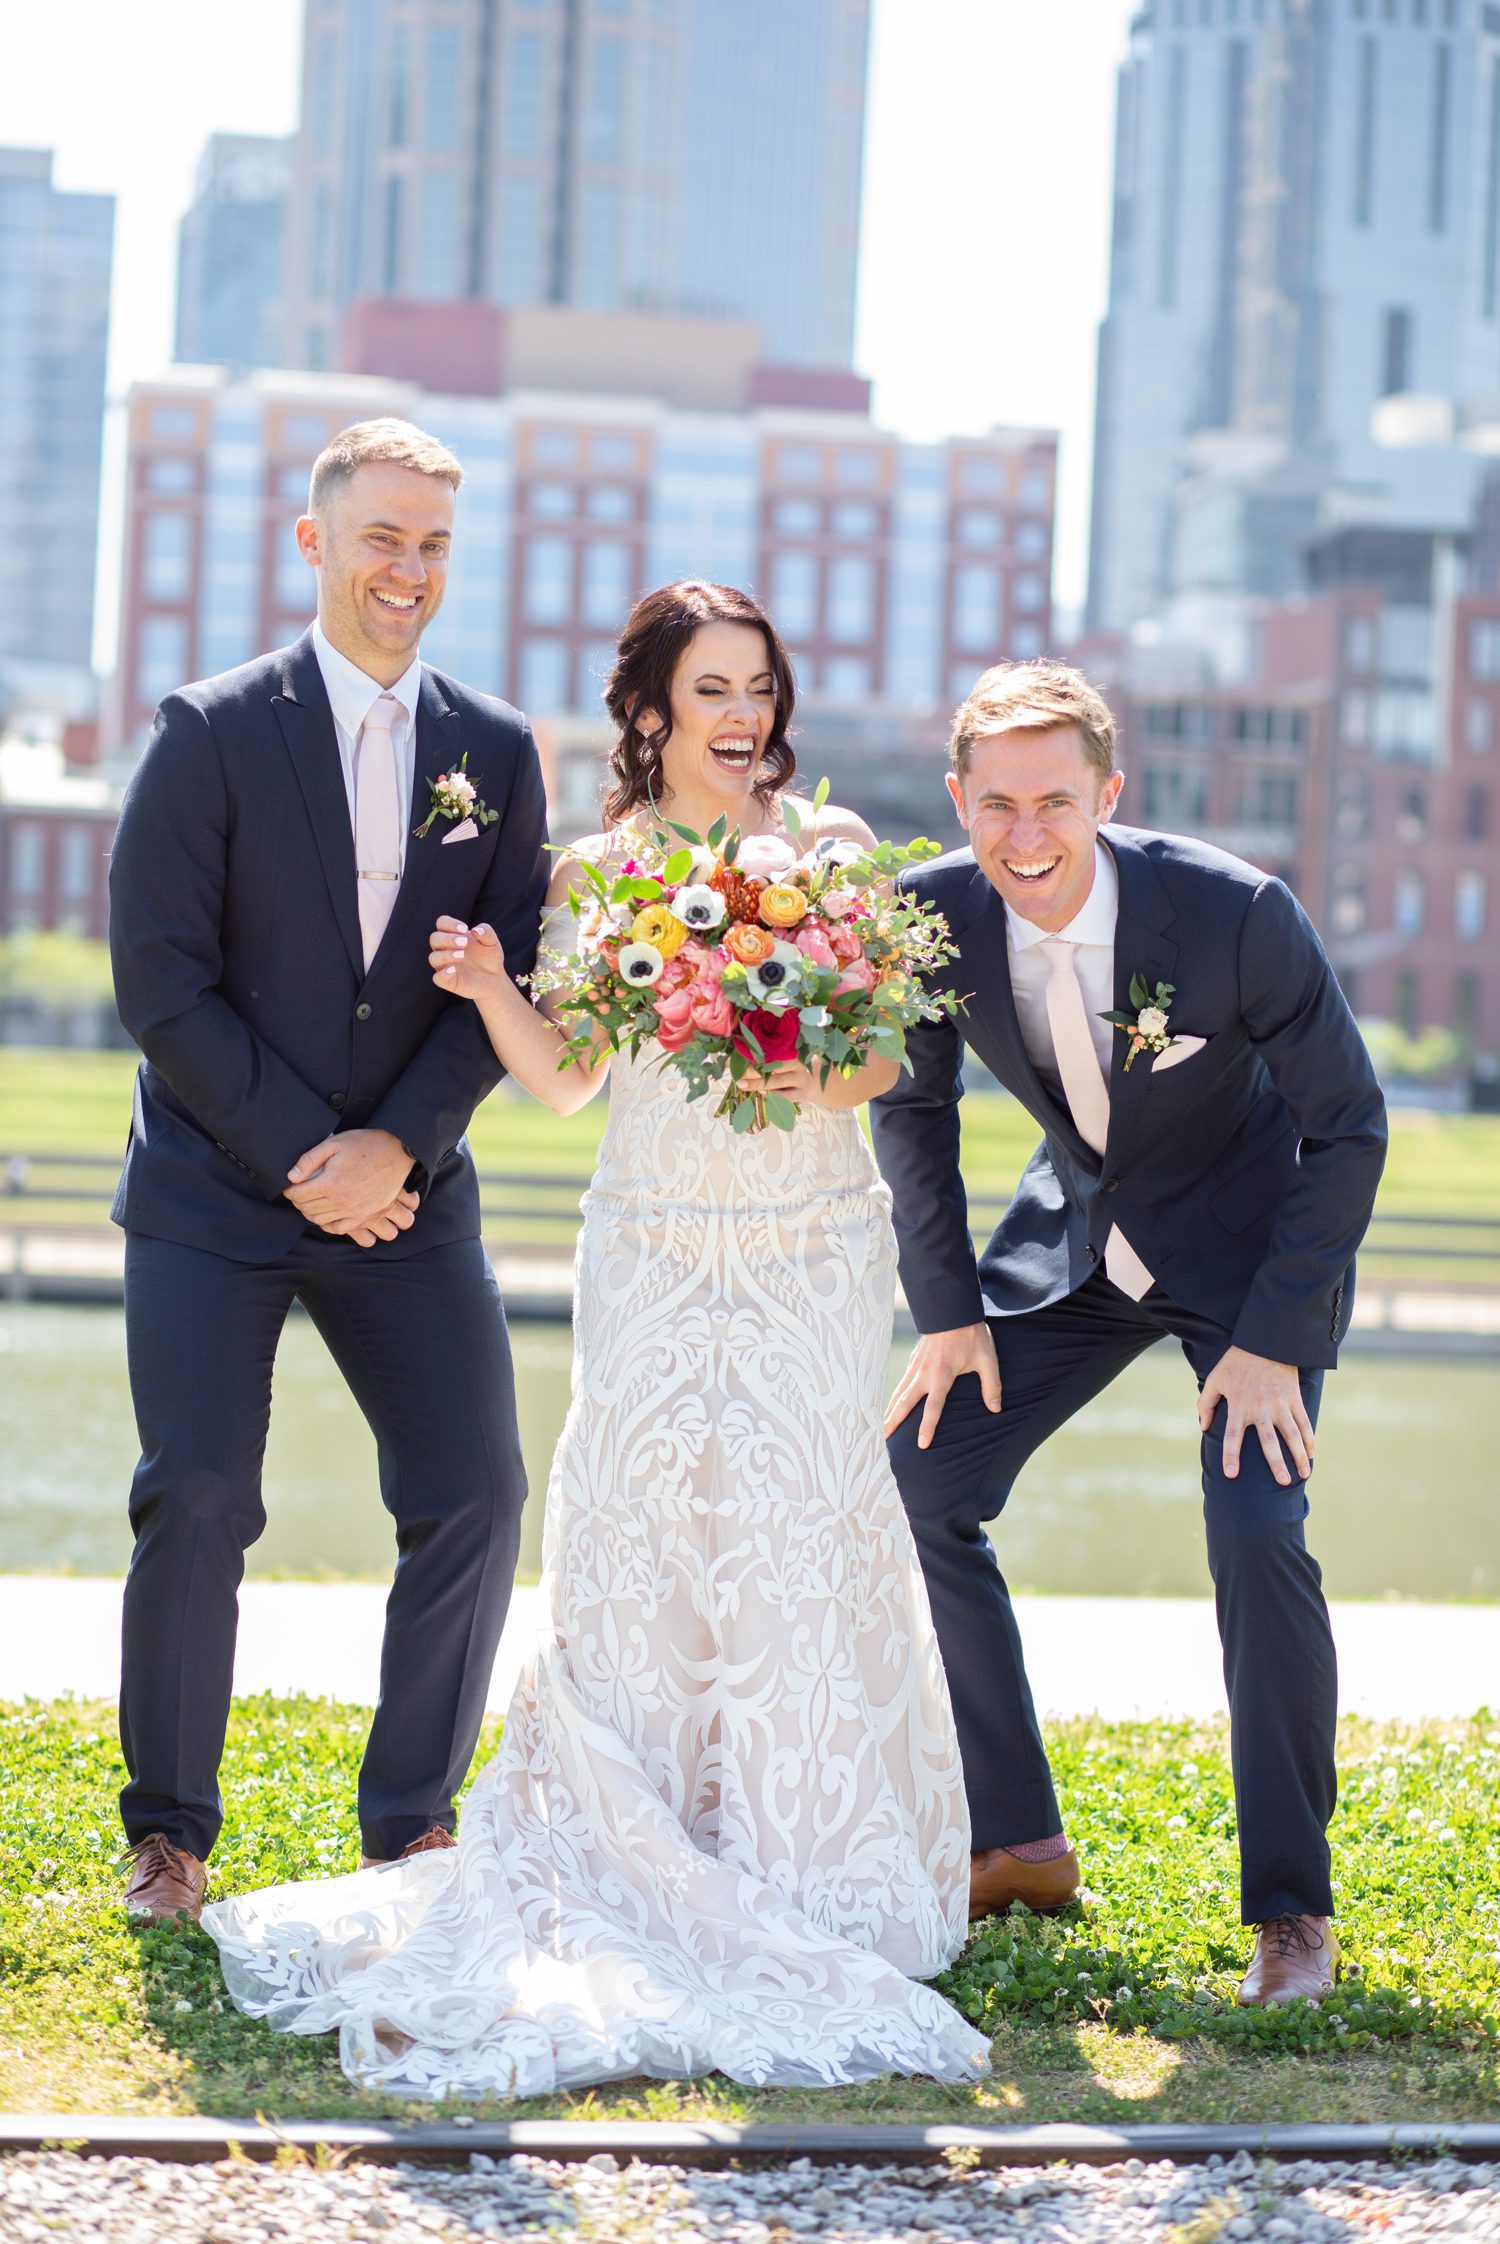 The Bridge Building Event Spaces Downtown Nashville, TN Wedding Brides Bothers Make Her Laugh